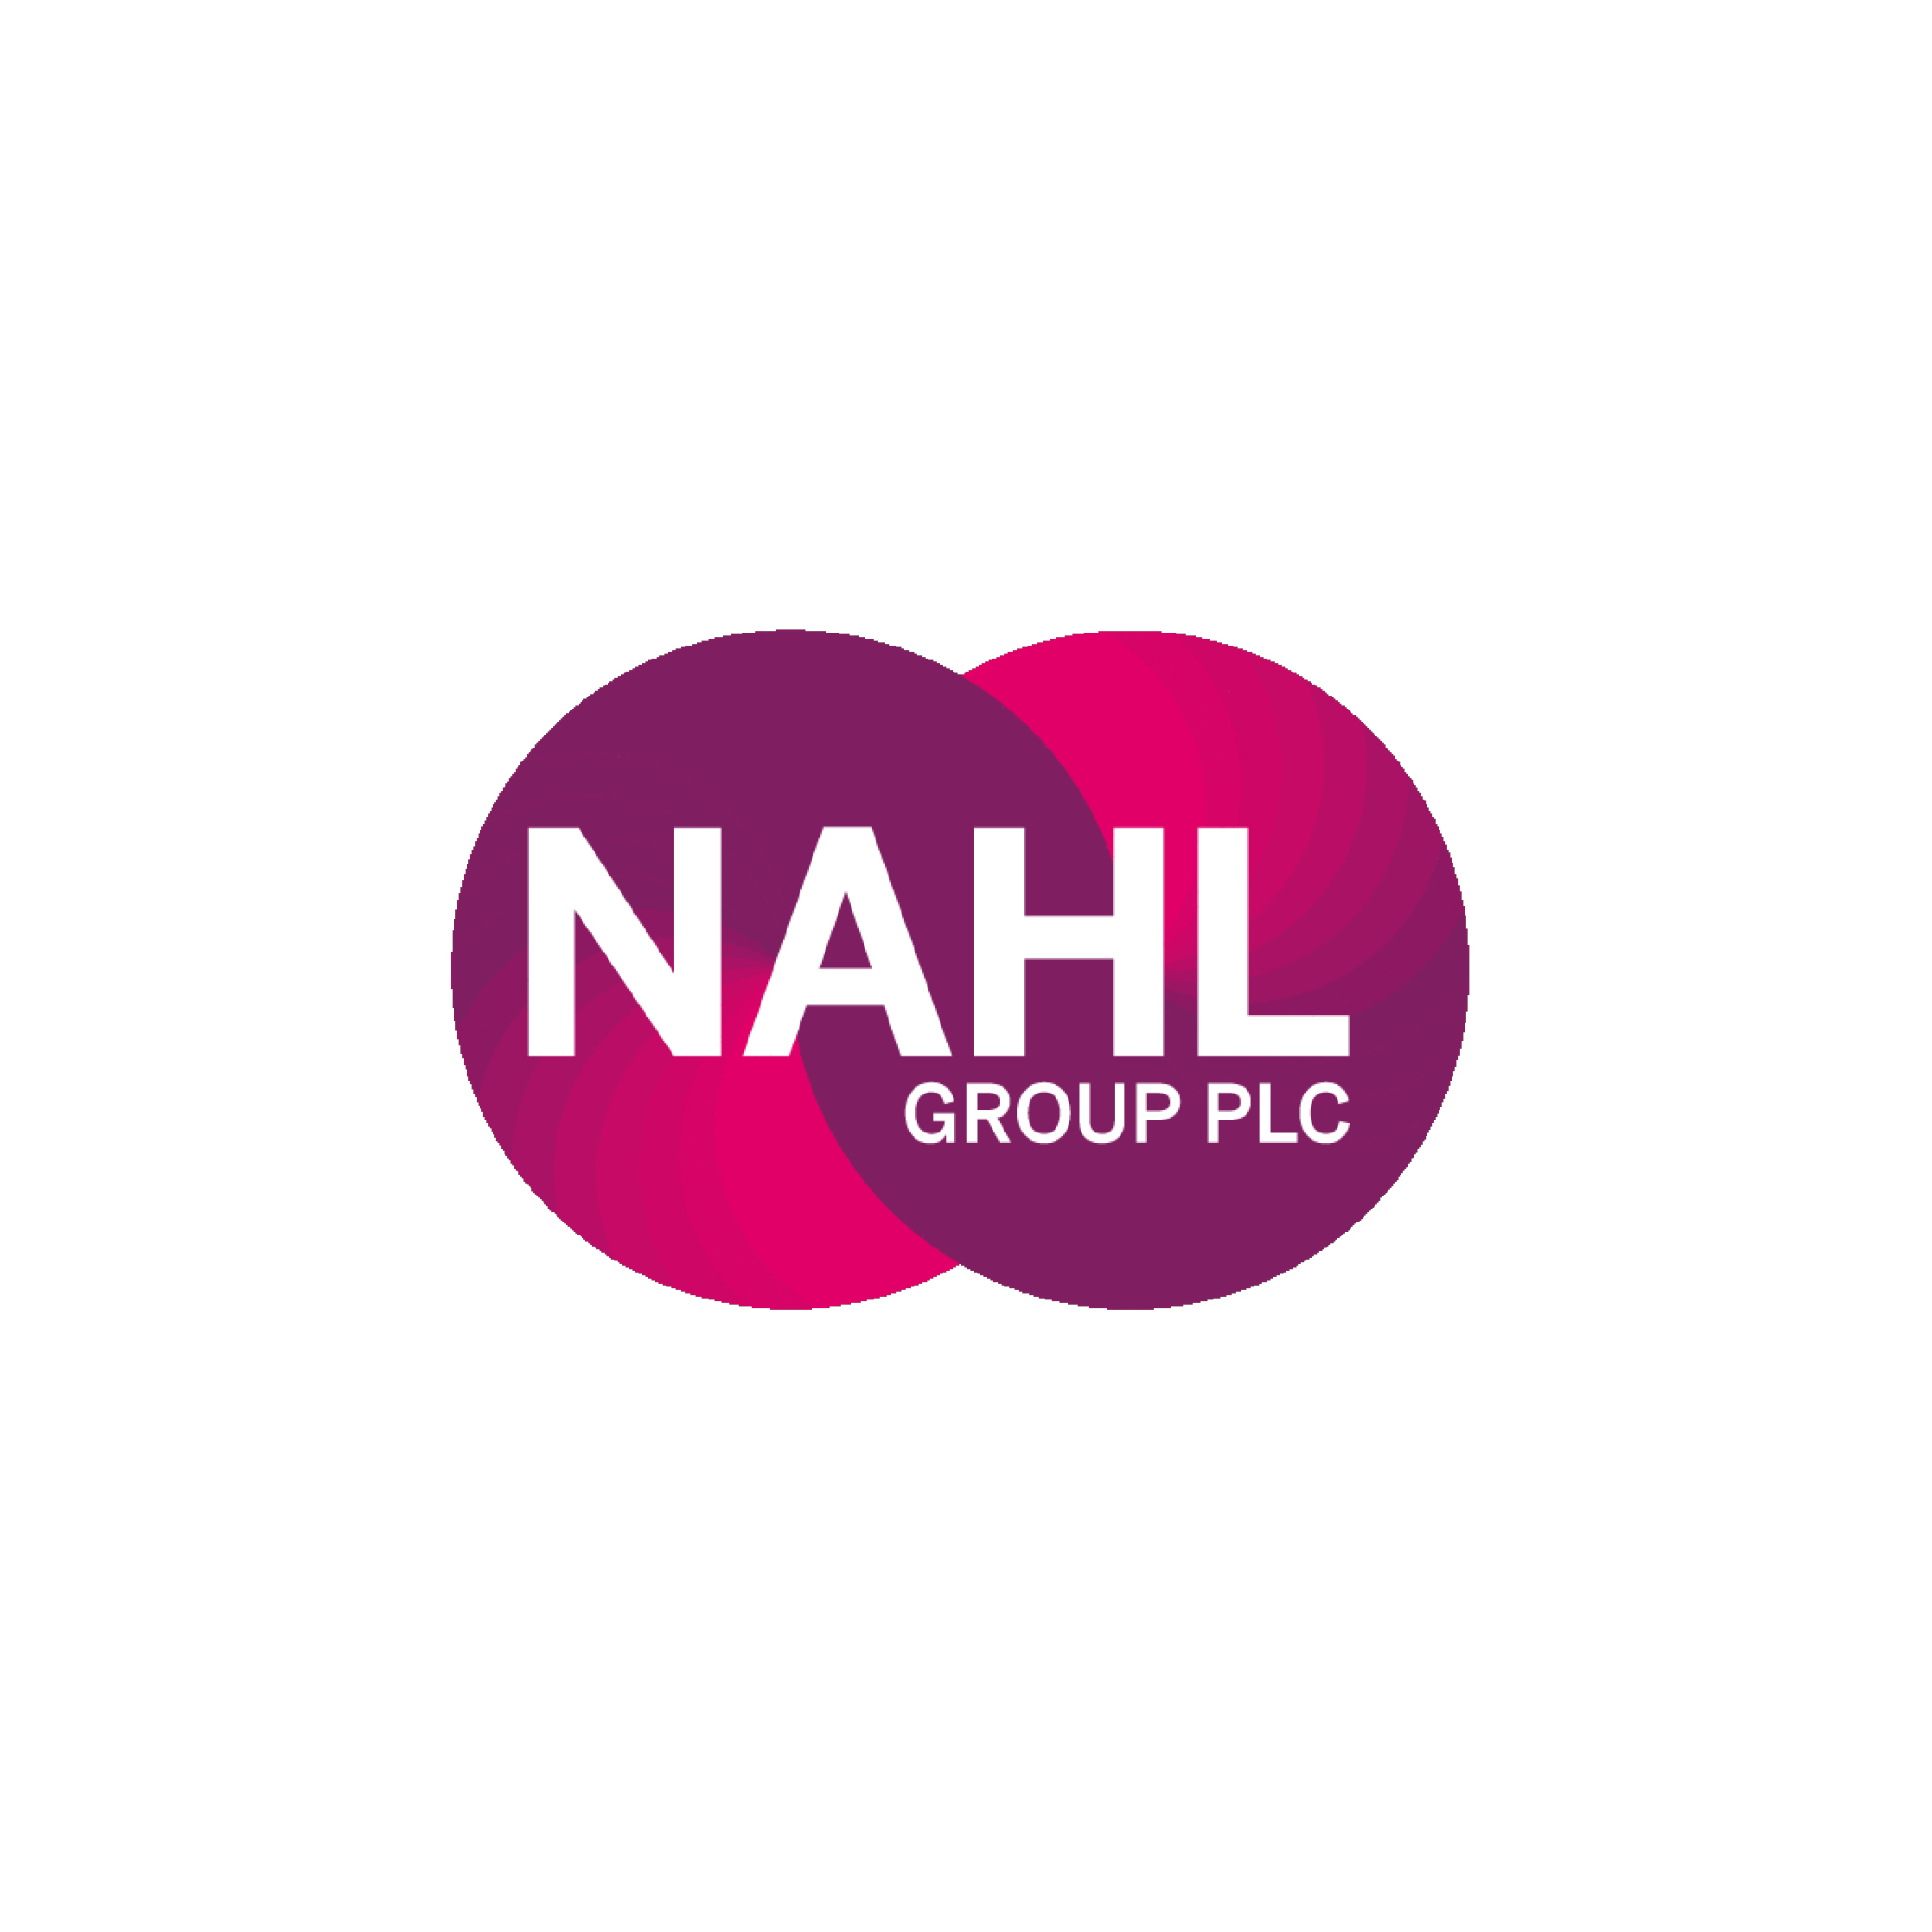 NAHL Group plc